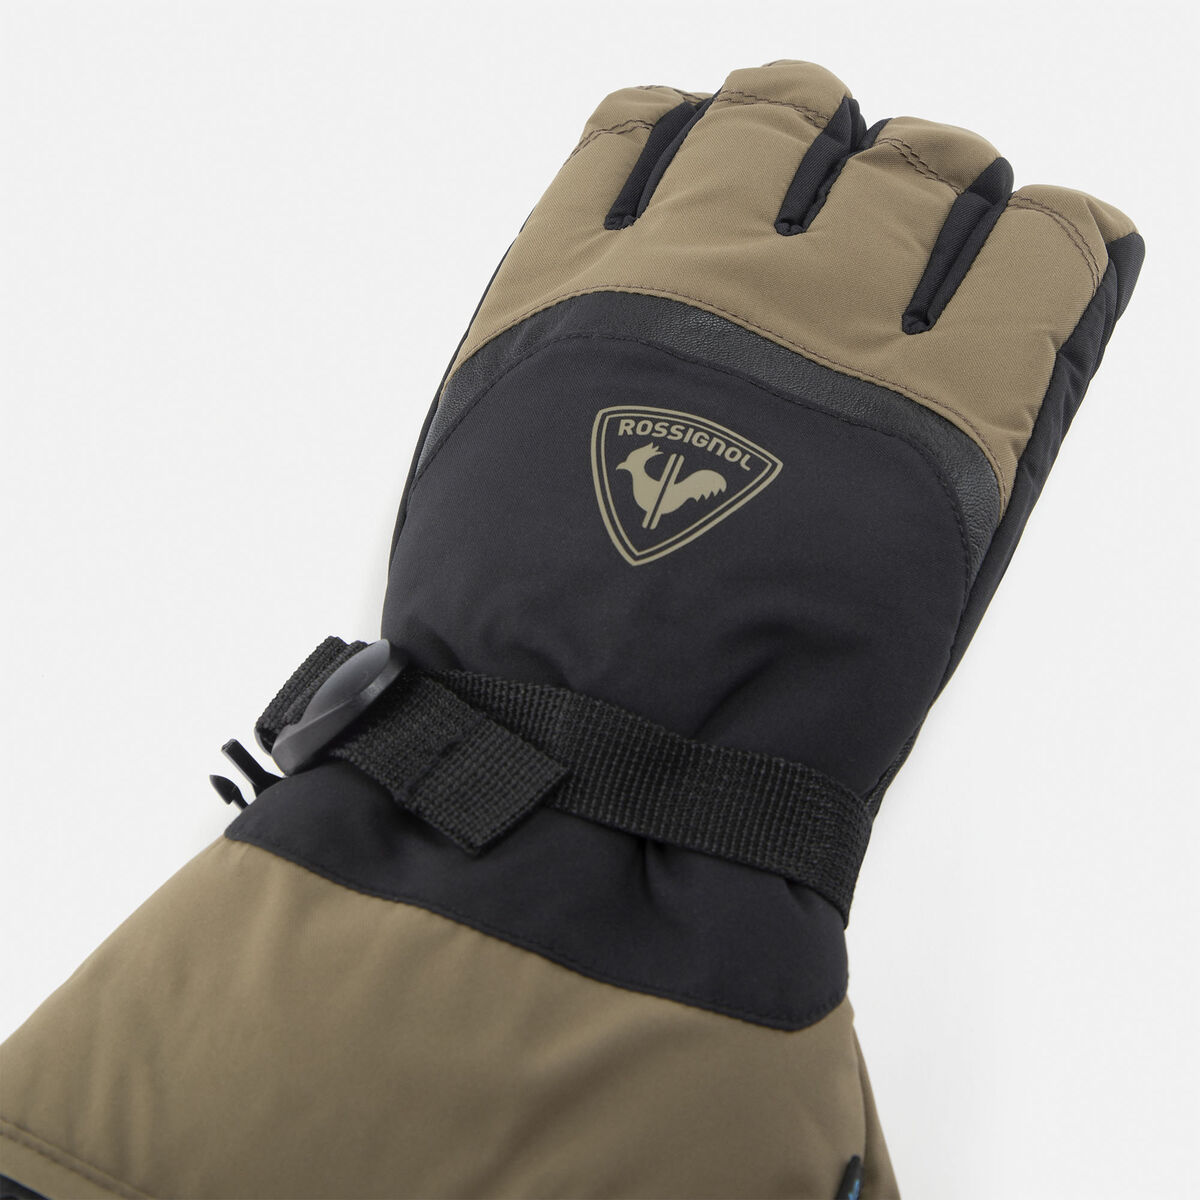 Men's Type Ski Gloves